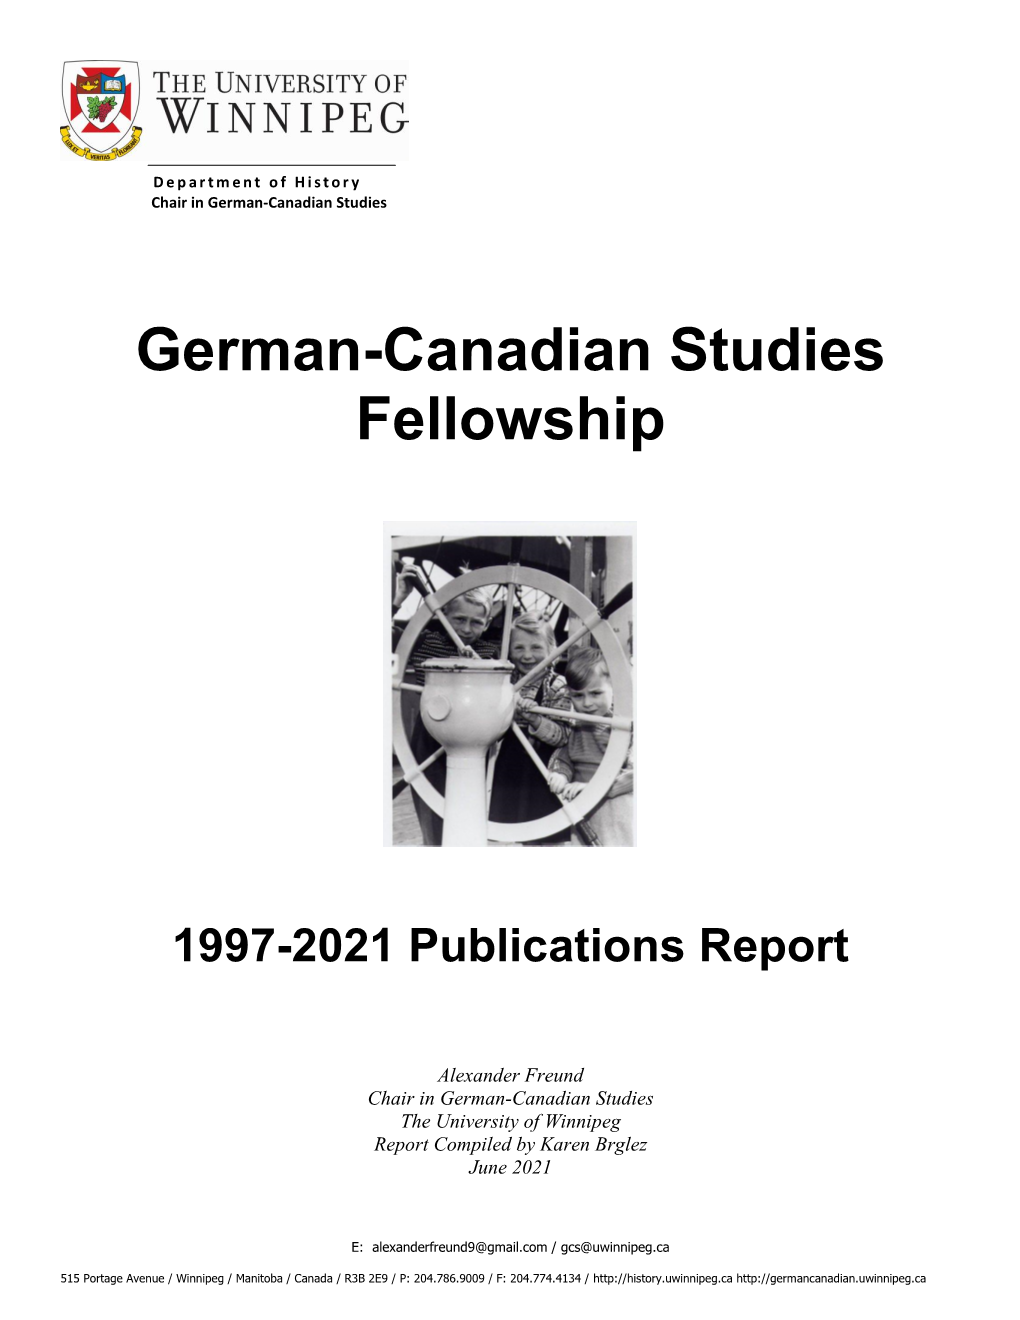 German-Canadian Studies Fellowship